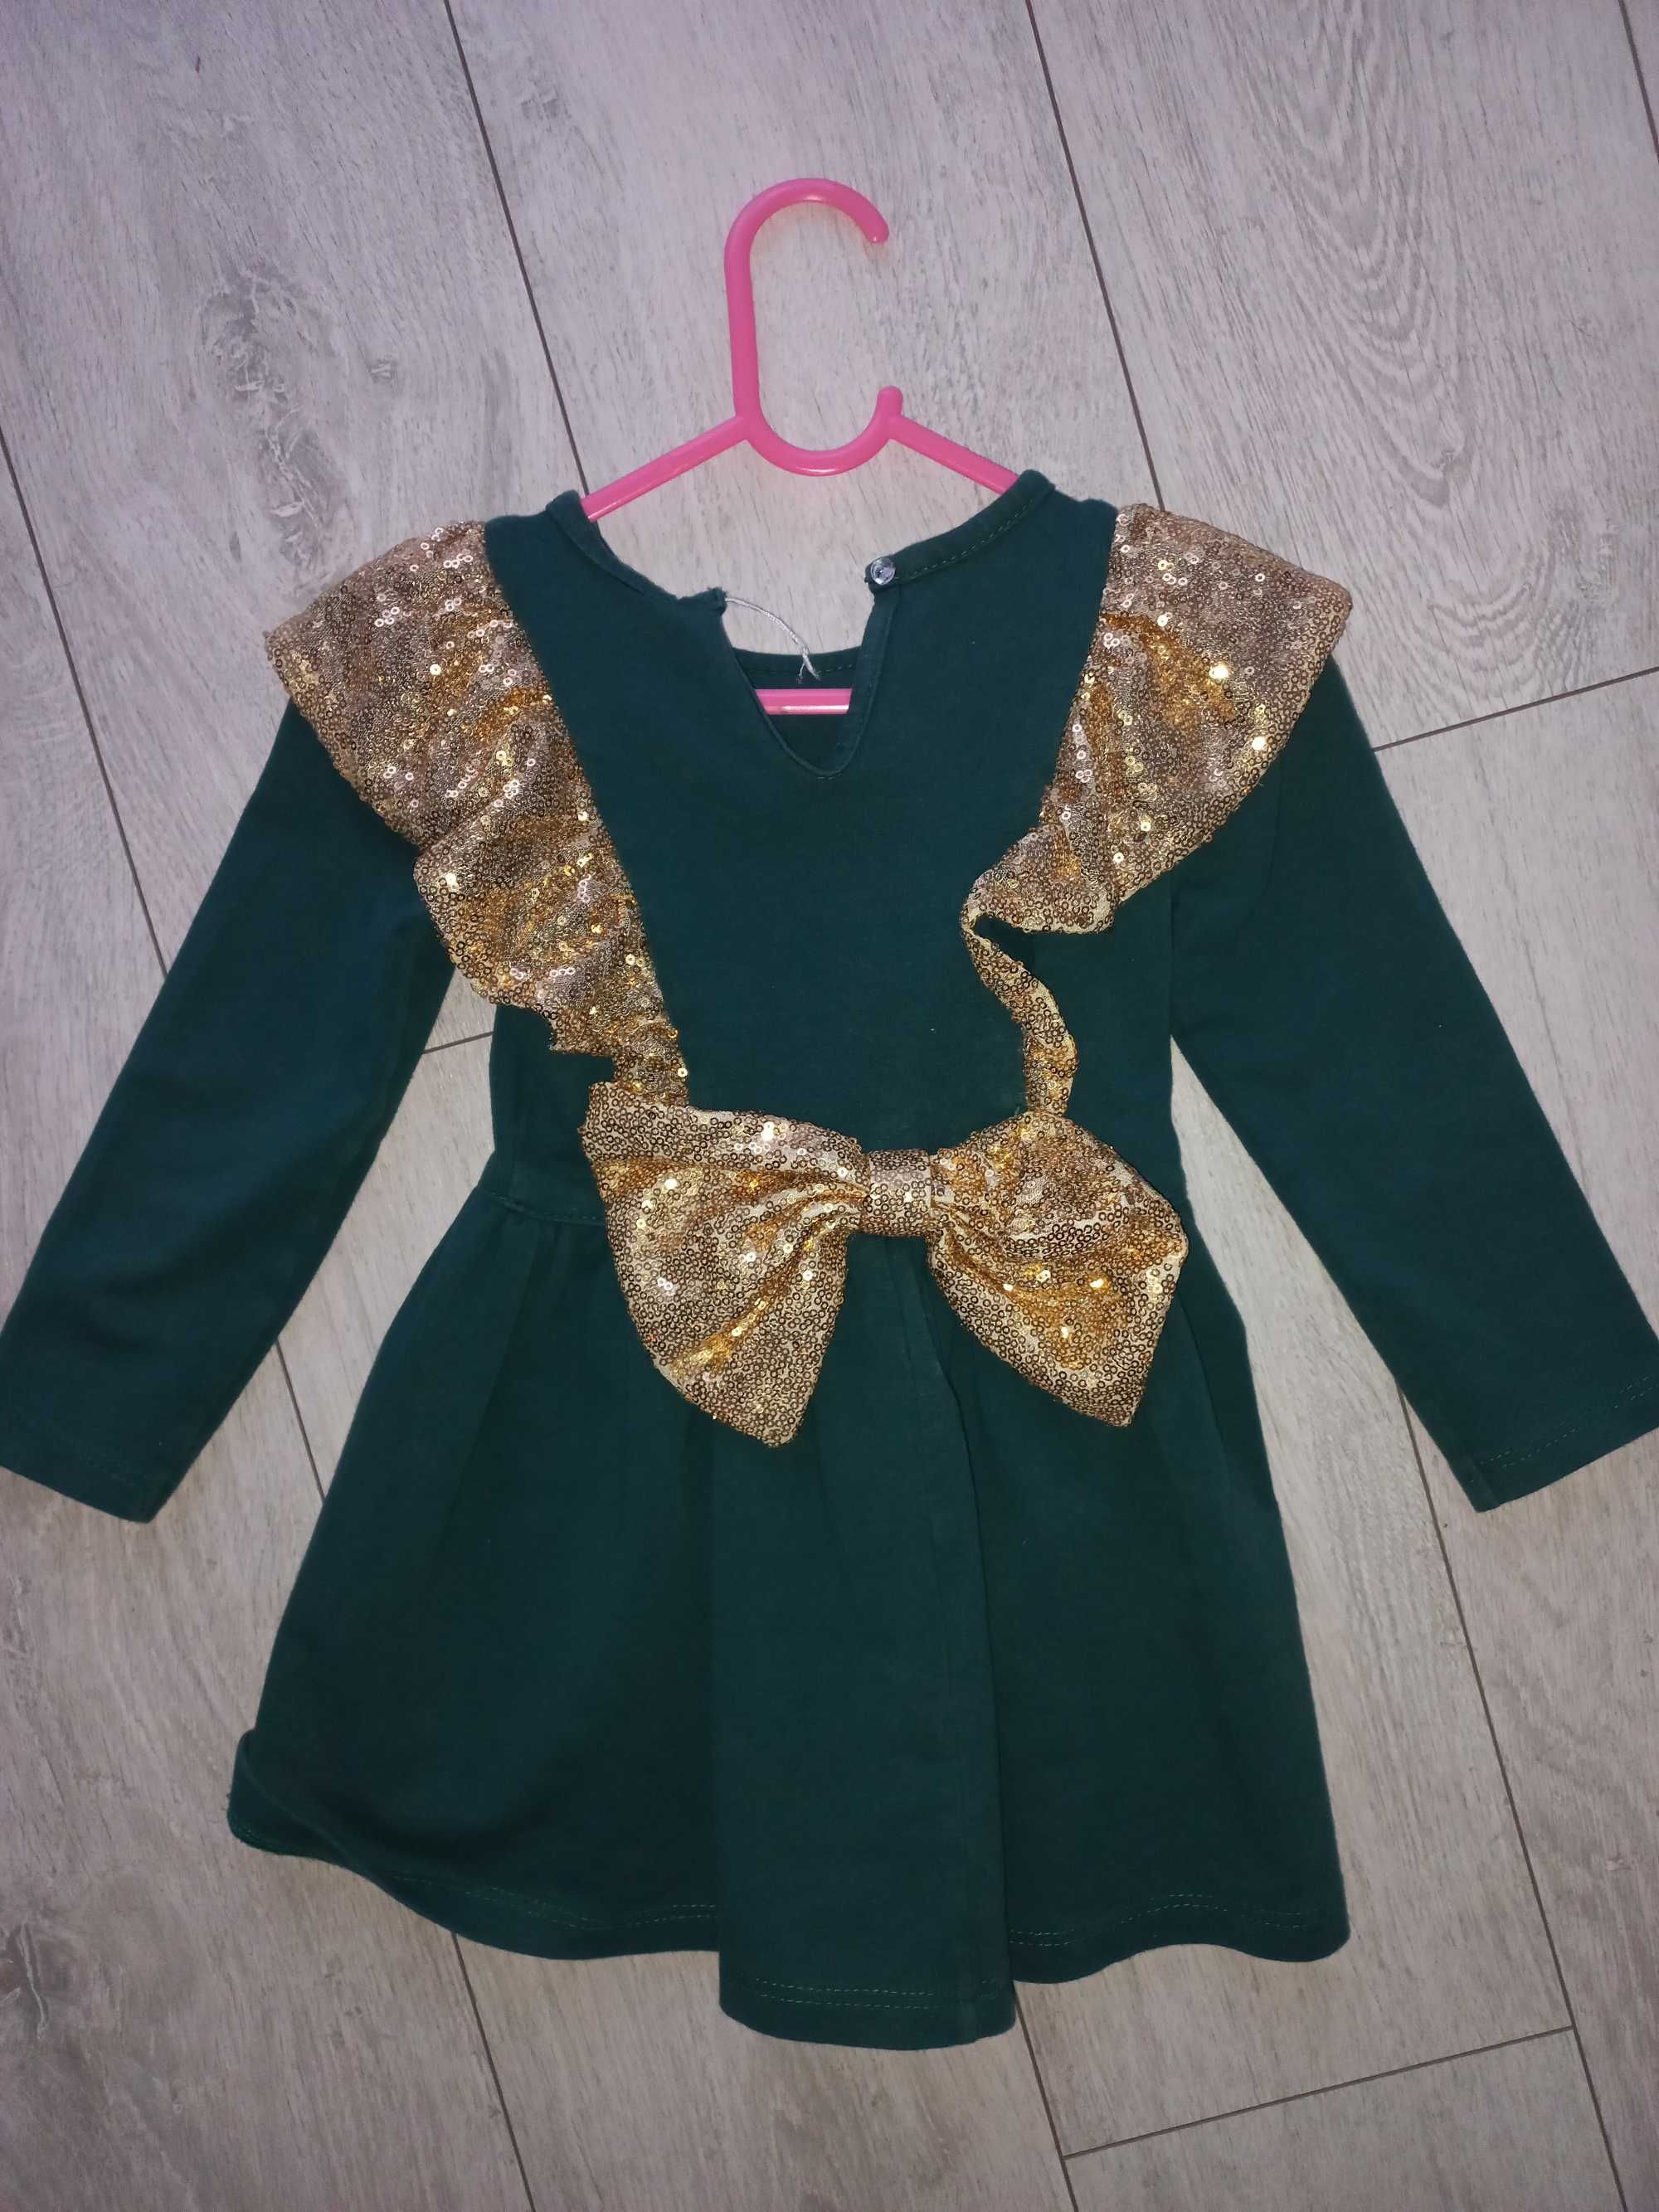 Sukienki dla sióstr , handmade zielona,falbanka,cekiny104 i 122/128